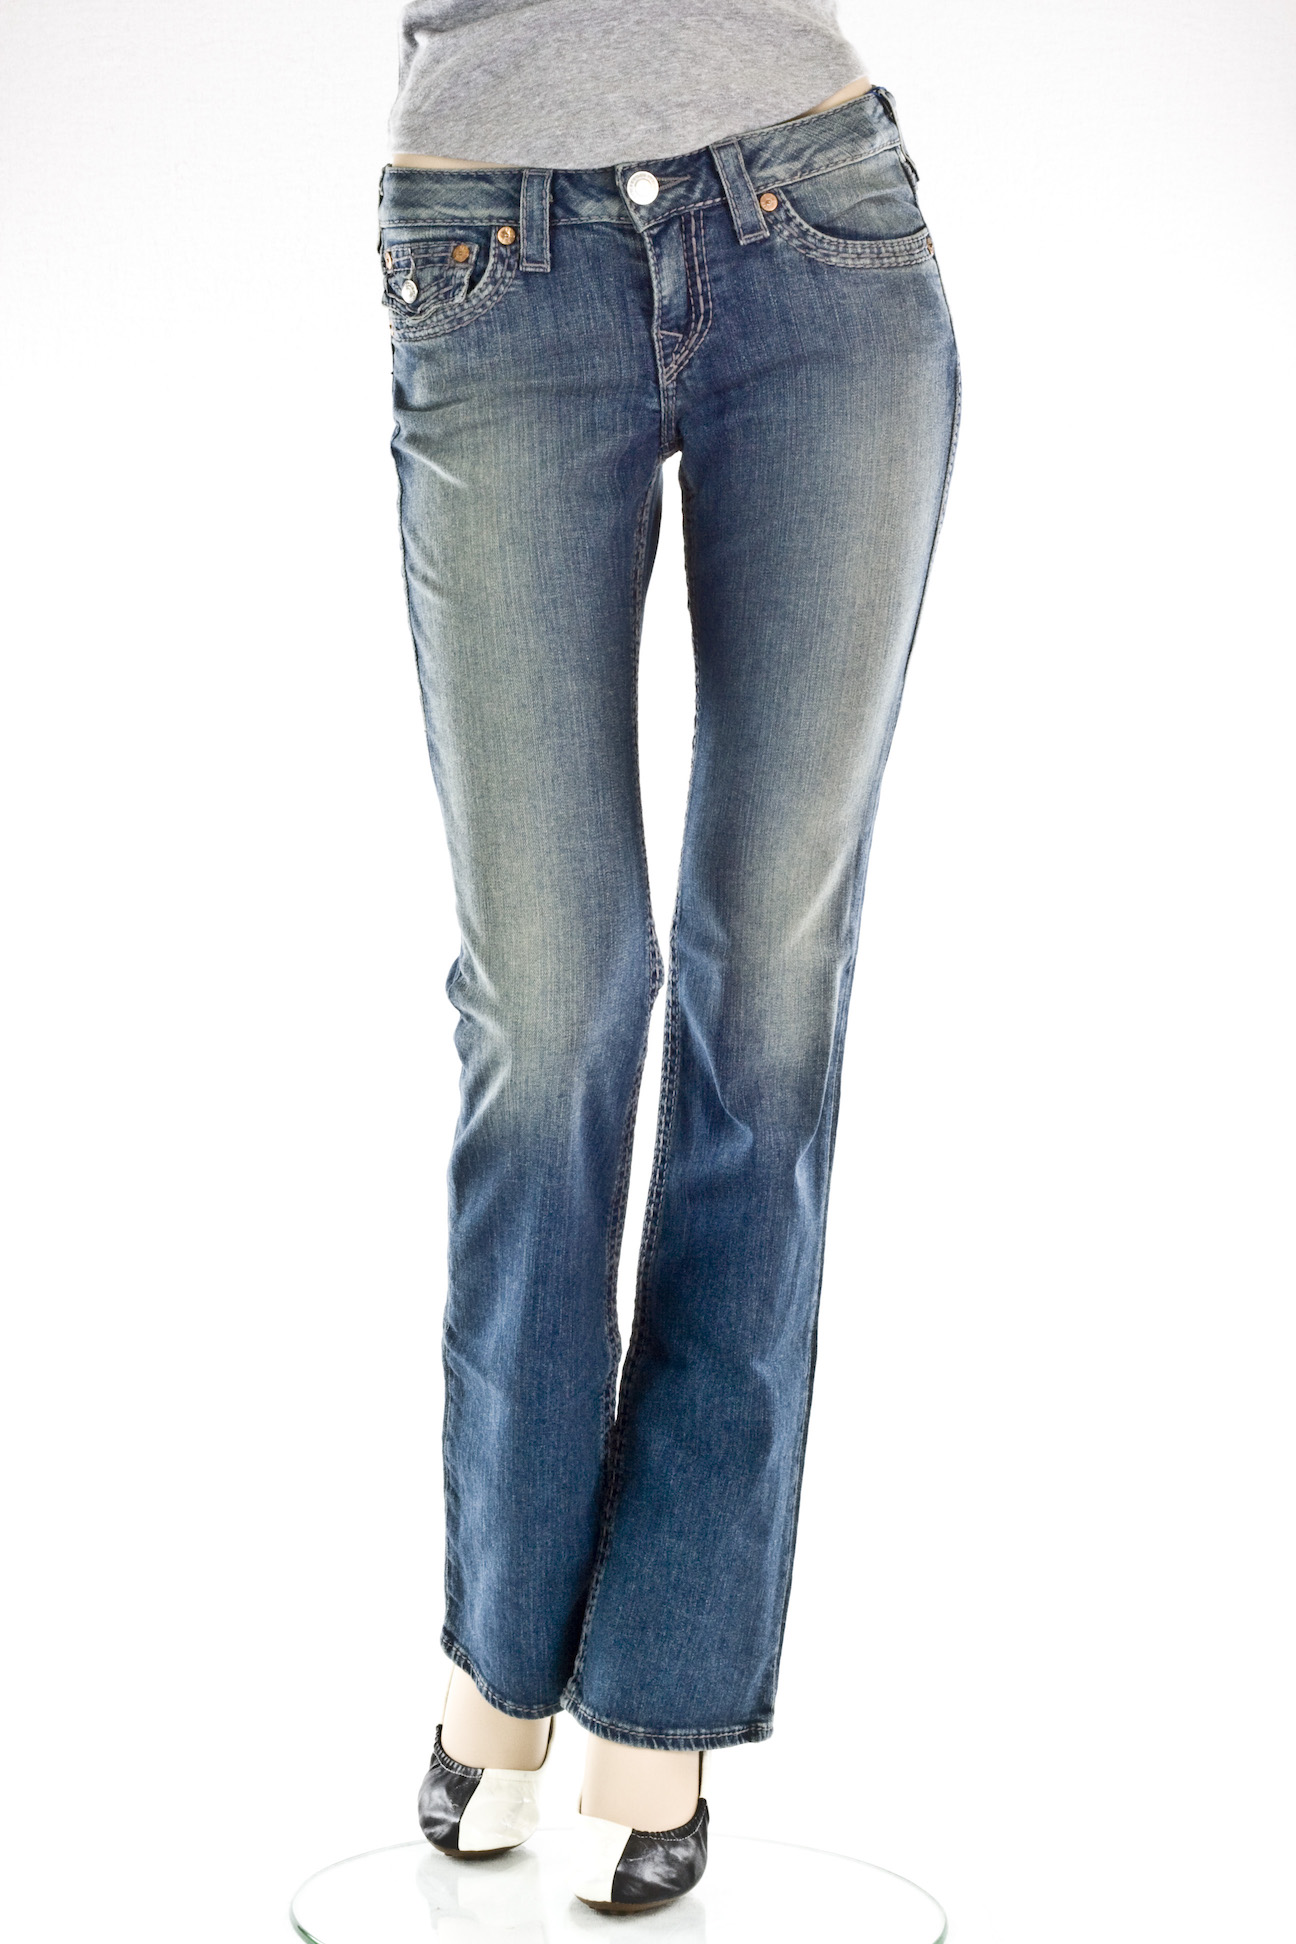 джинсы женские  "Буткат" HI-RISE BOOT BIG T